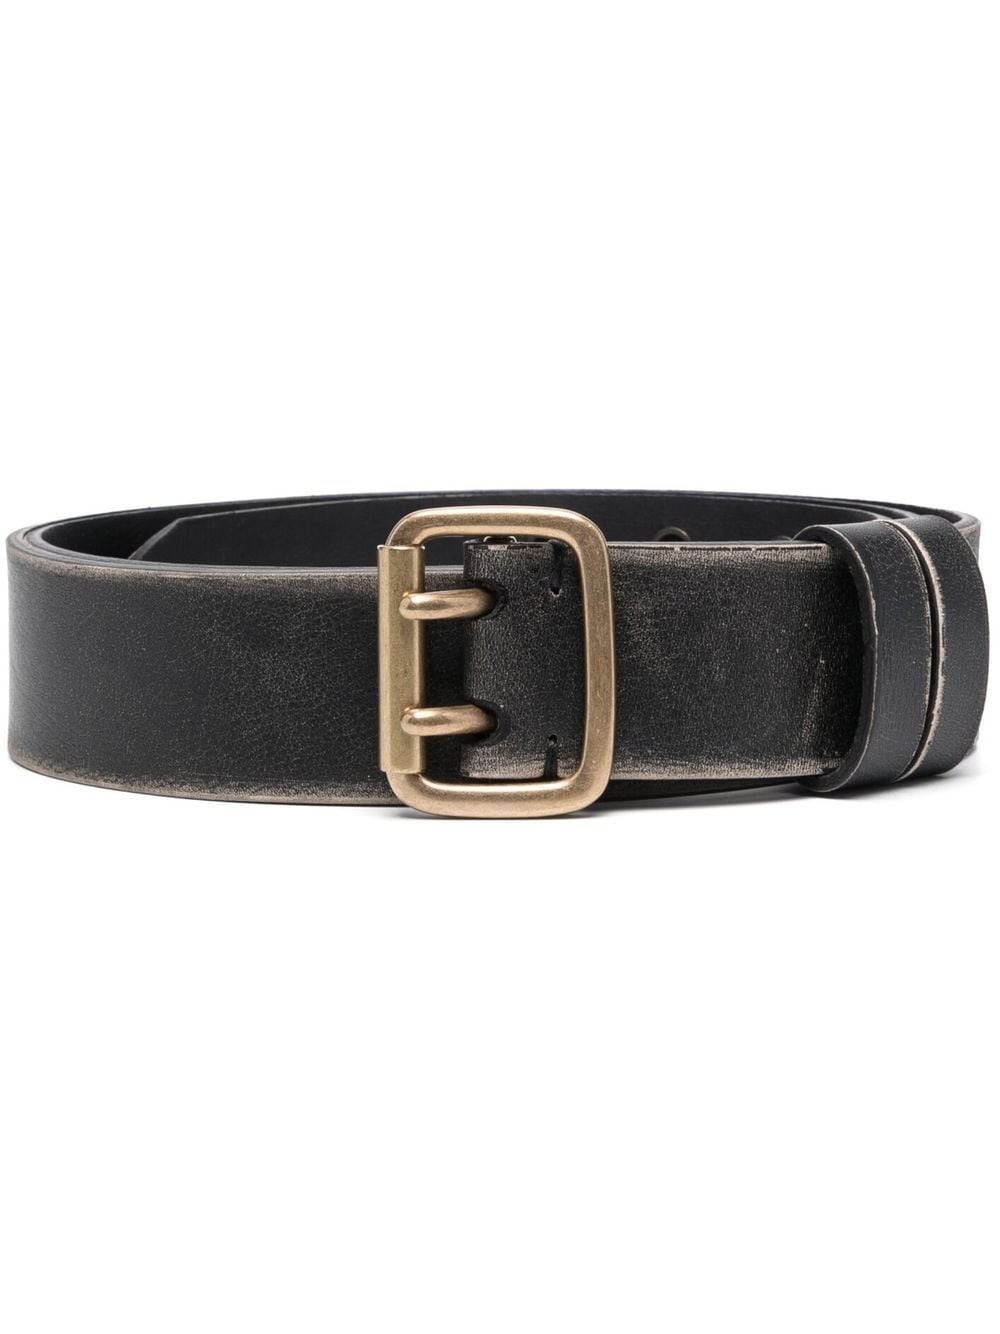 buckle leather belt - 1